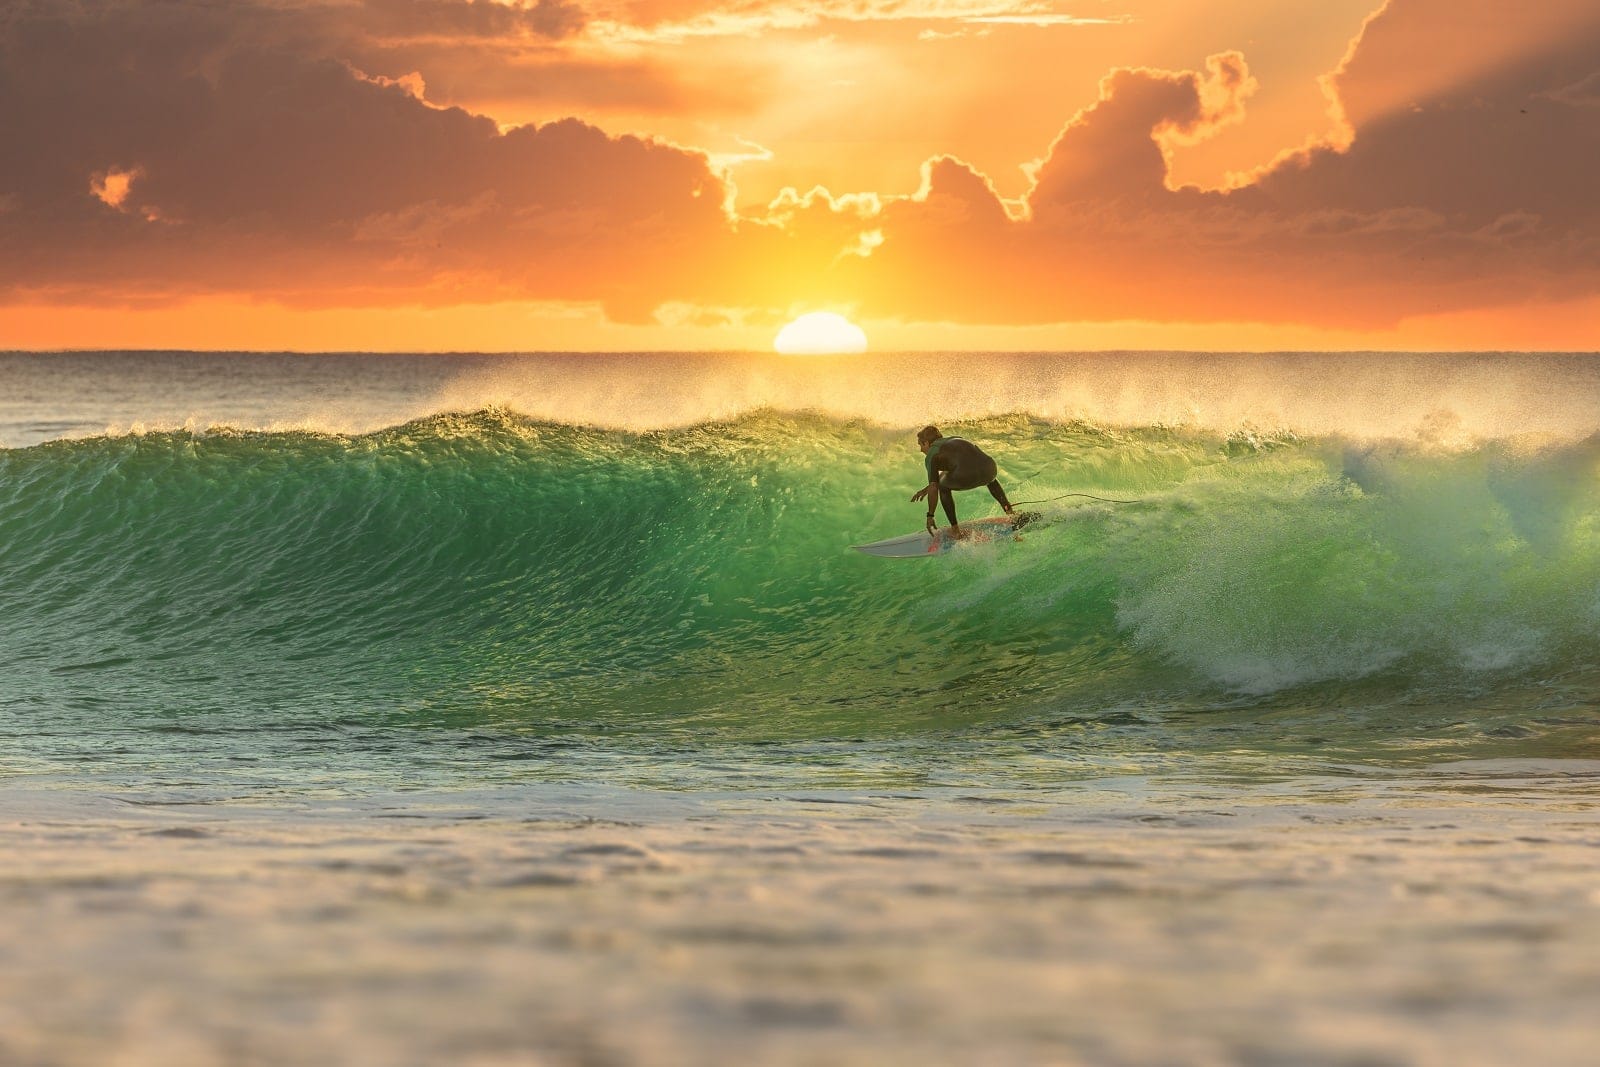 surfer surfing during sunrise